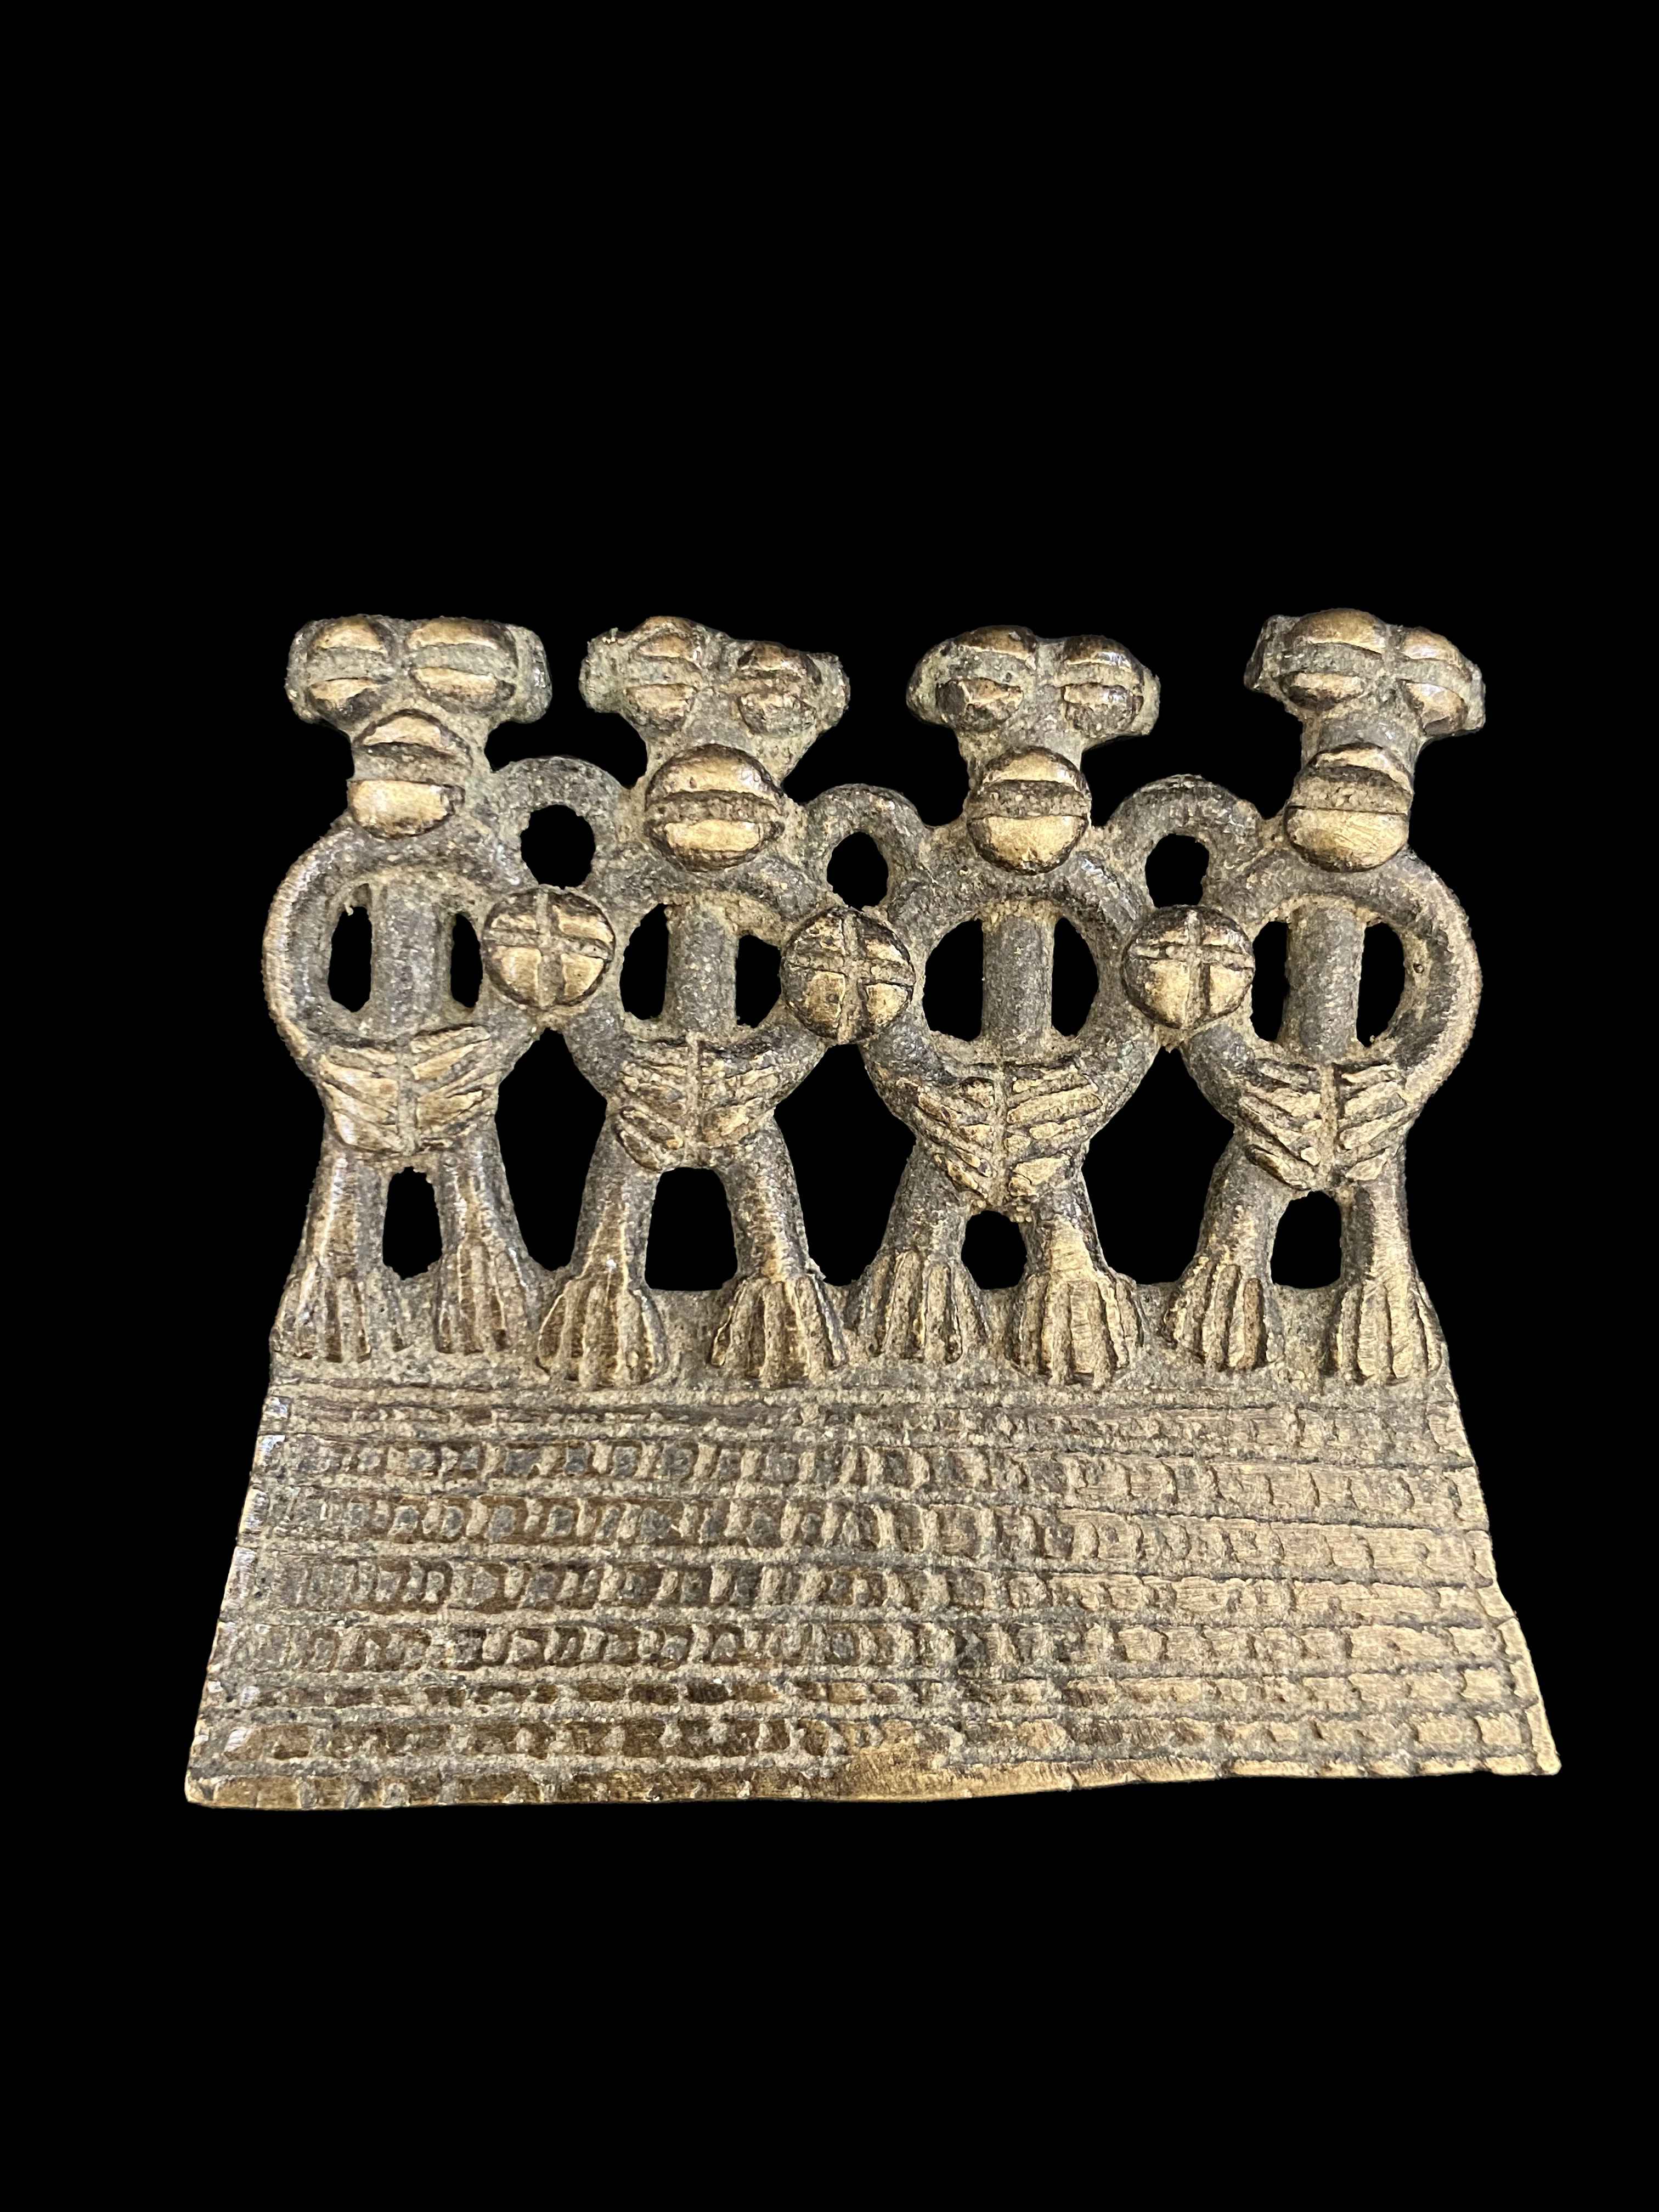 4 Figured Bronze Divination Pendant - Senufo People, Ivory Coast